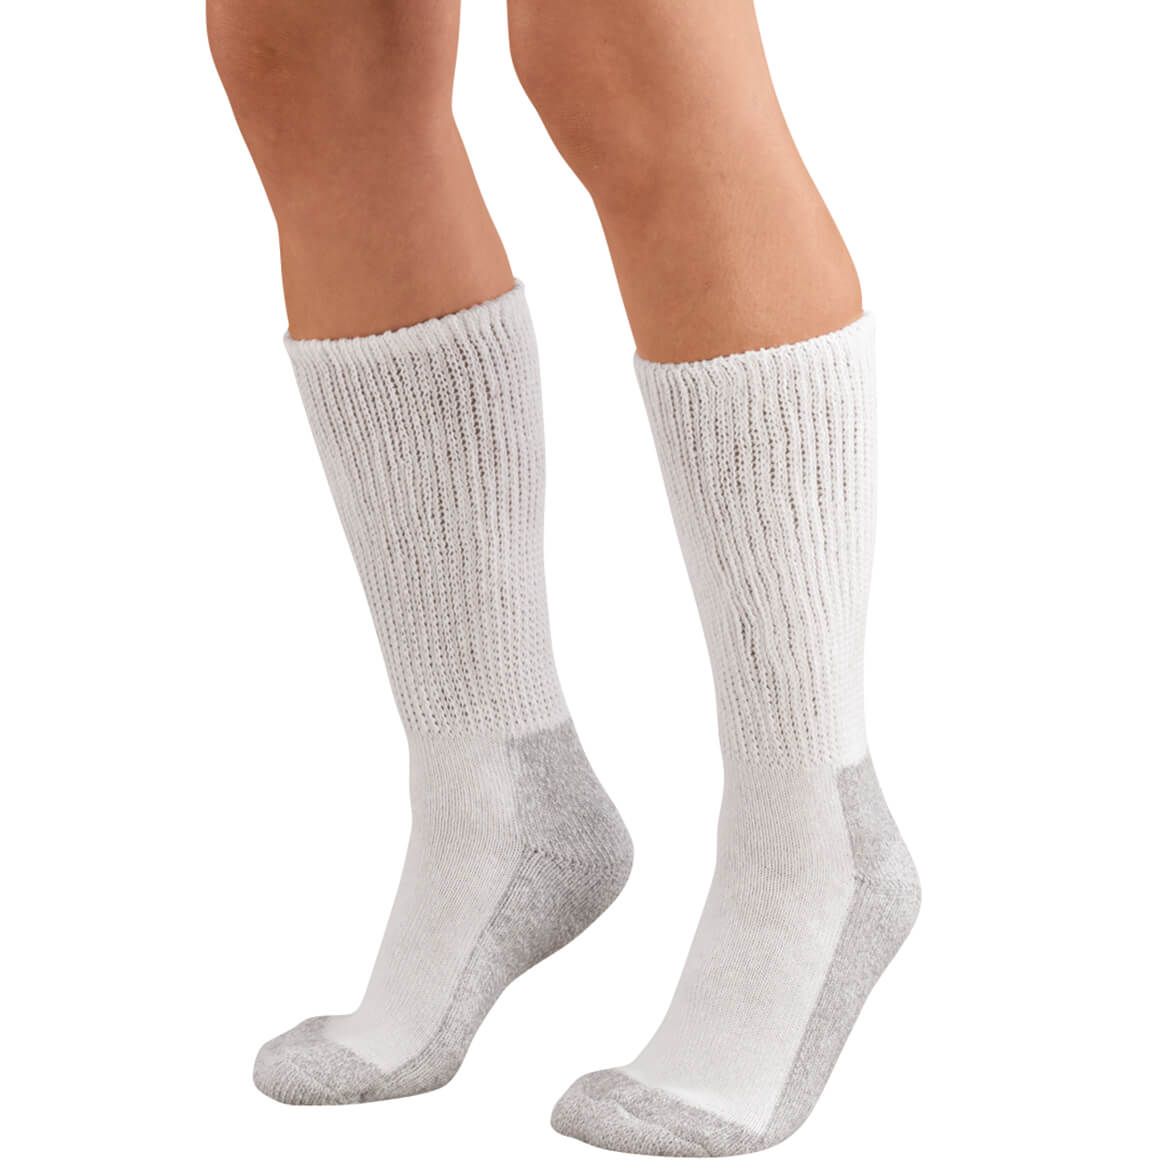 Men's Diabetic Socks - 2 Pairs + '-' + 304498